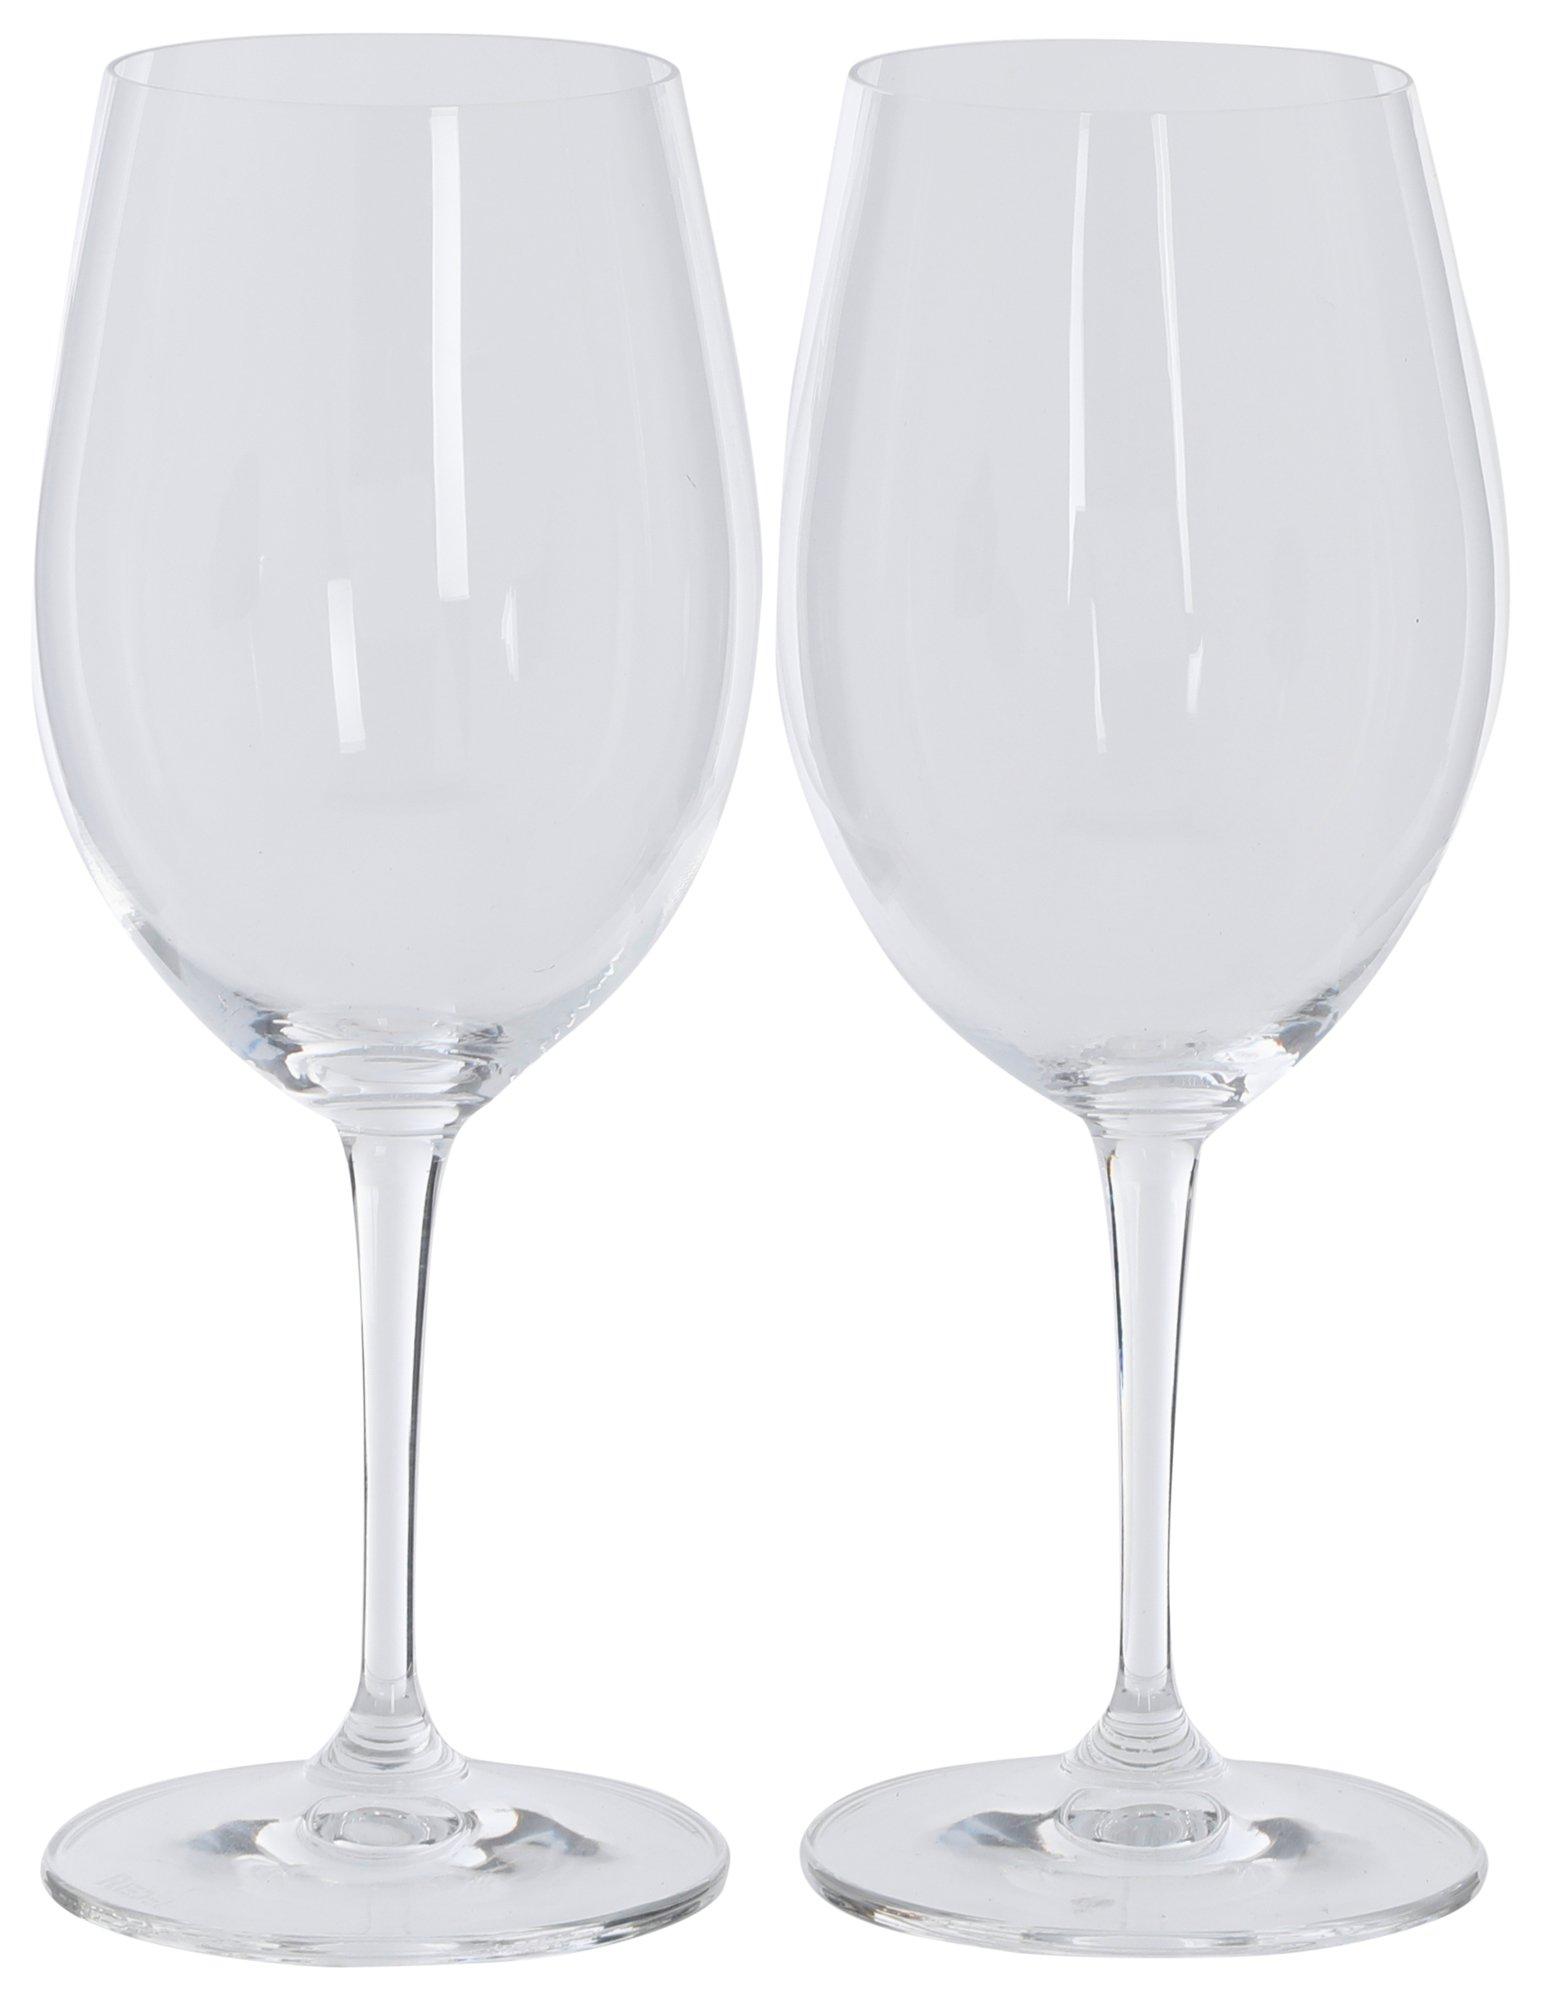 2 Pk Wine Glasses